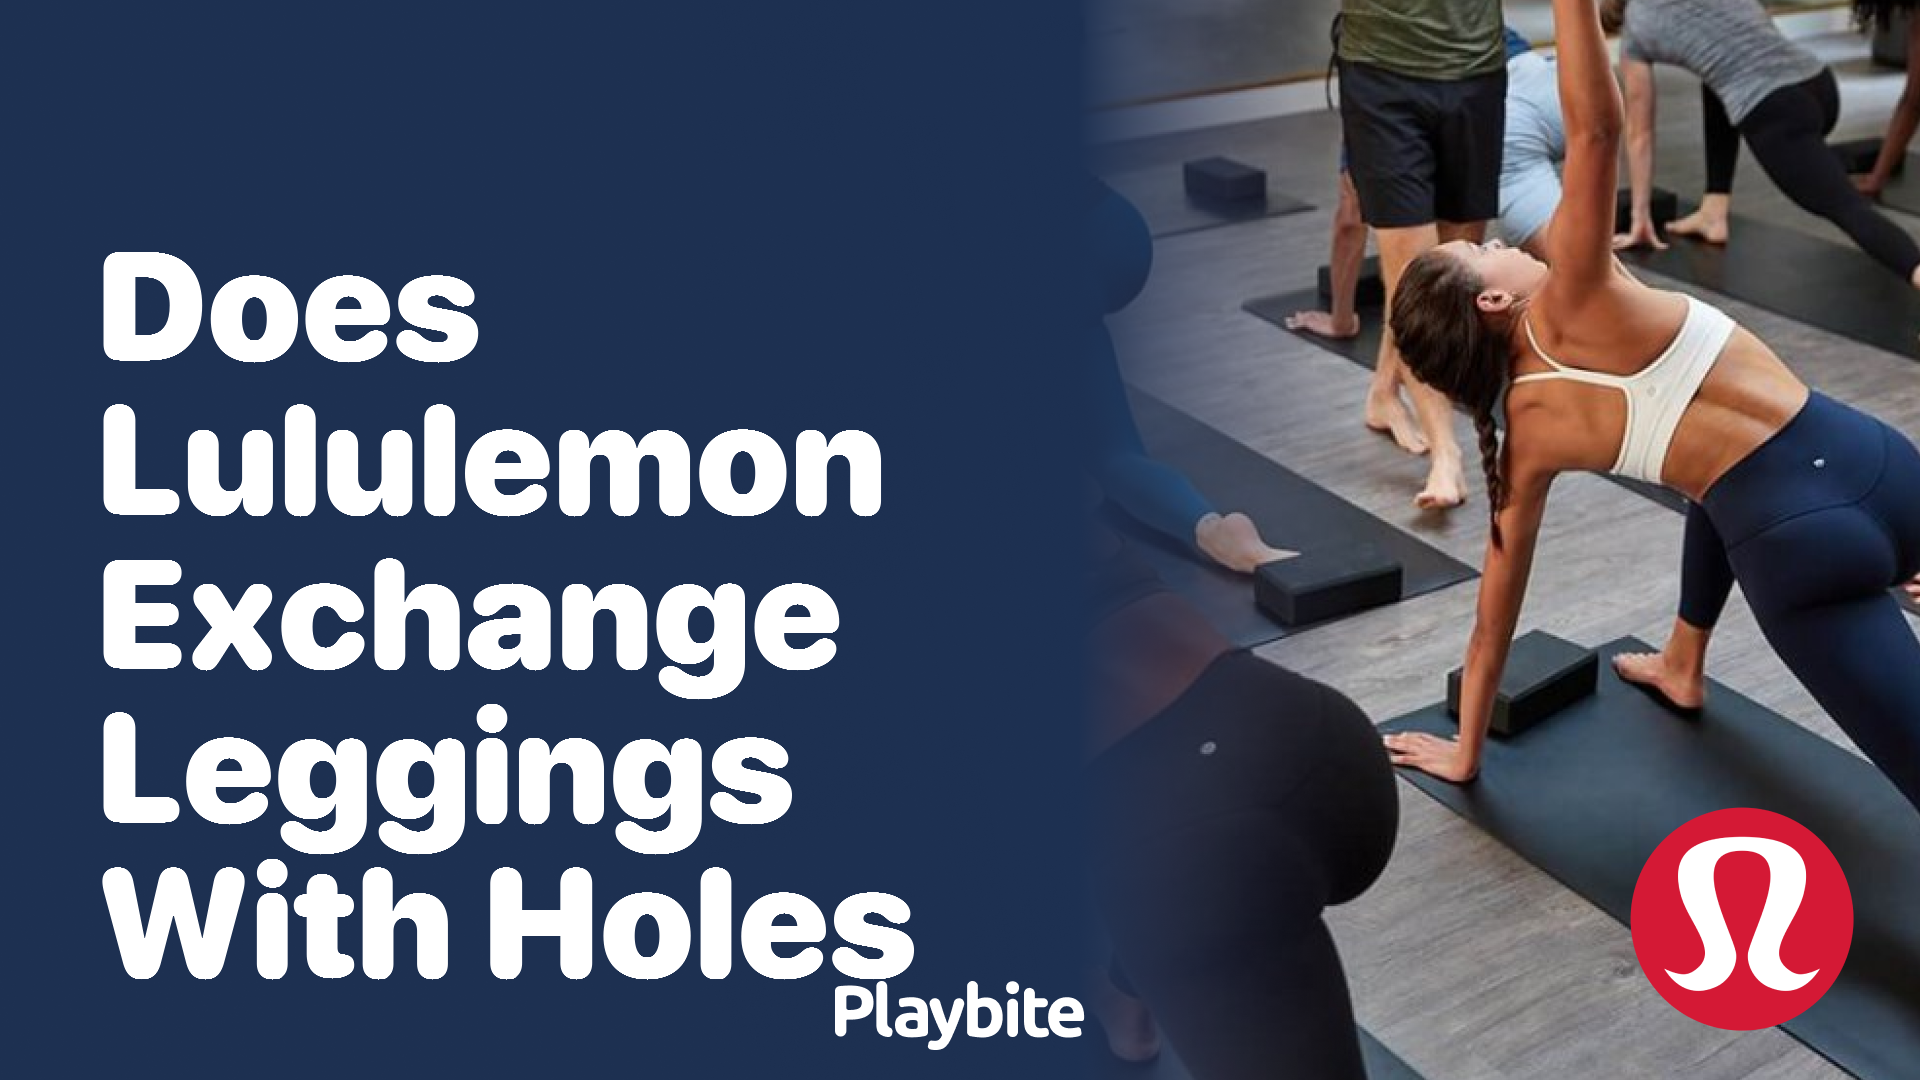 Does Lululemon Exchange Leggings With Holes? - Playbite